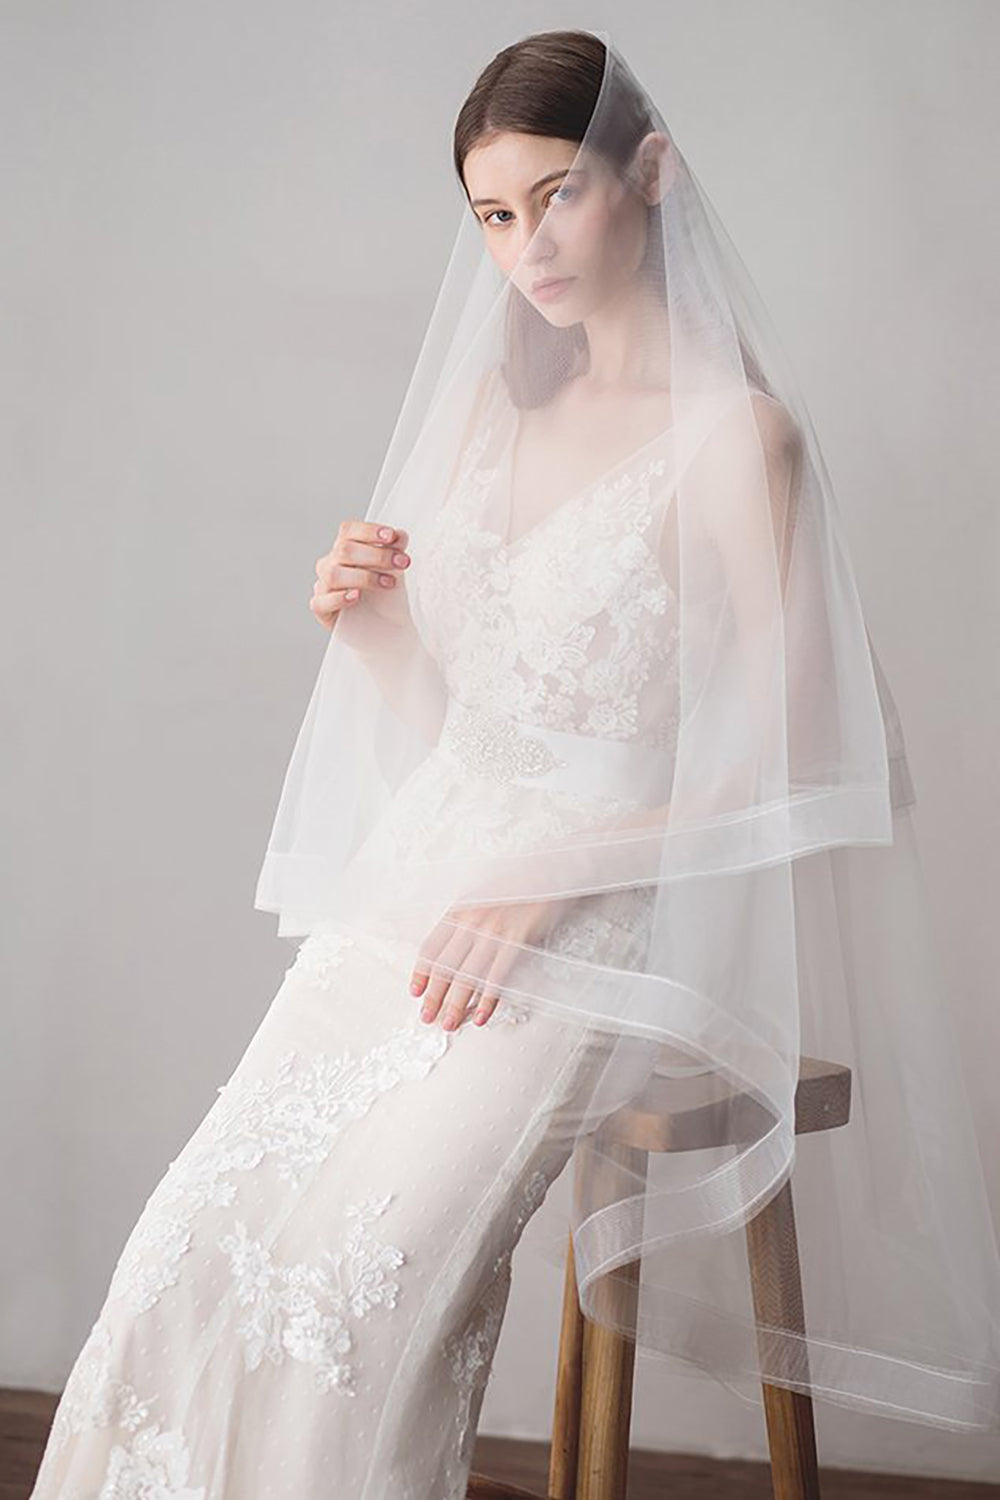 One Blushing Bride Lace Fingertip Wedding Veil, White / Off White / Ivory Bridal Veil White / Fingertip 38-40 inch / No Beading